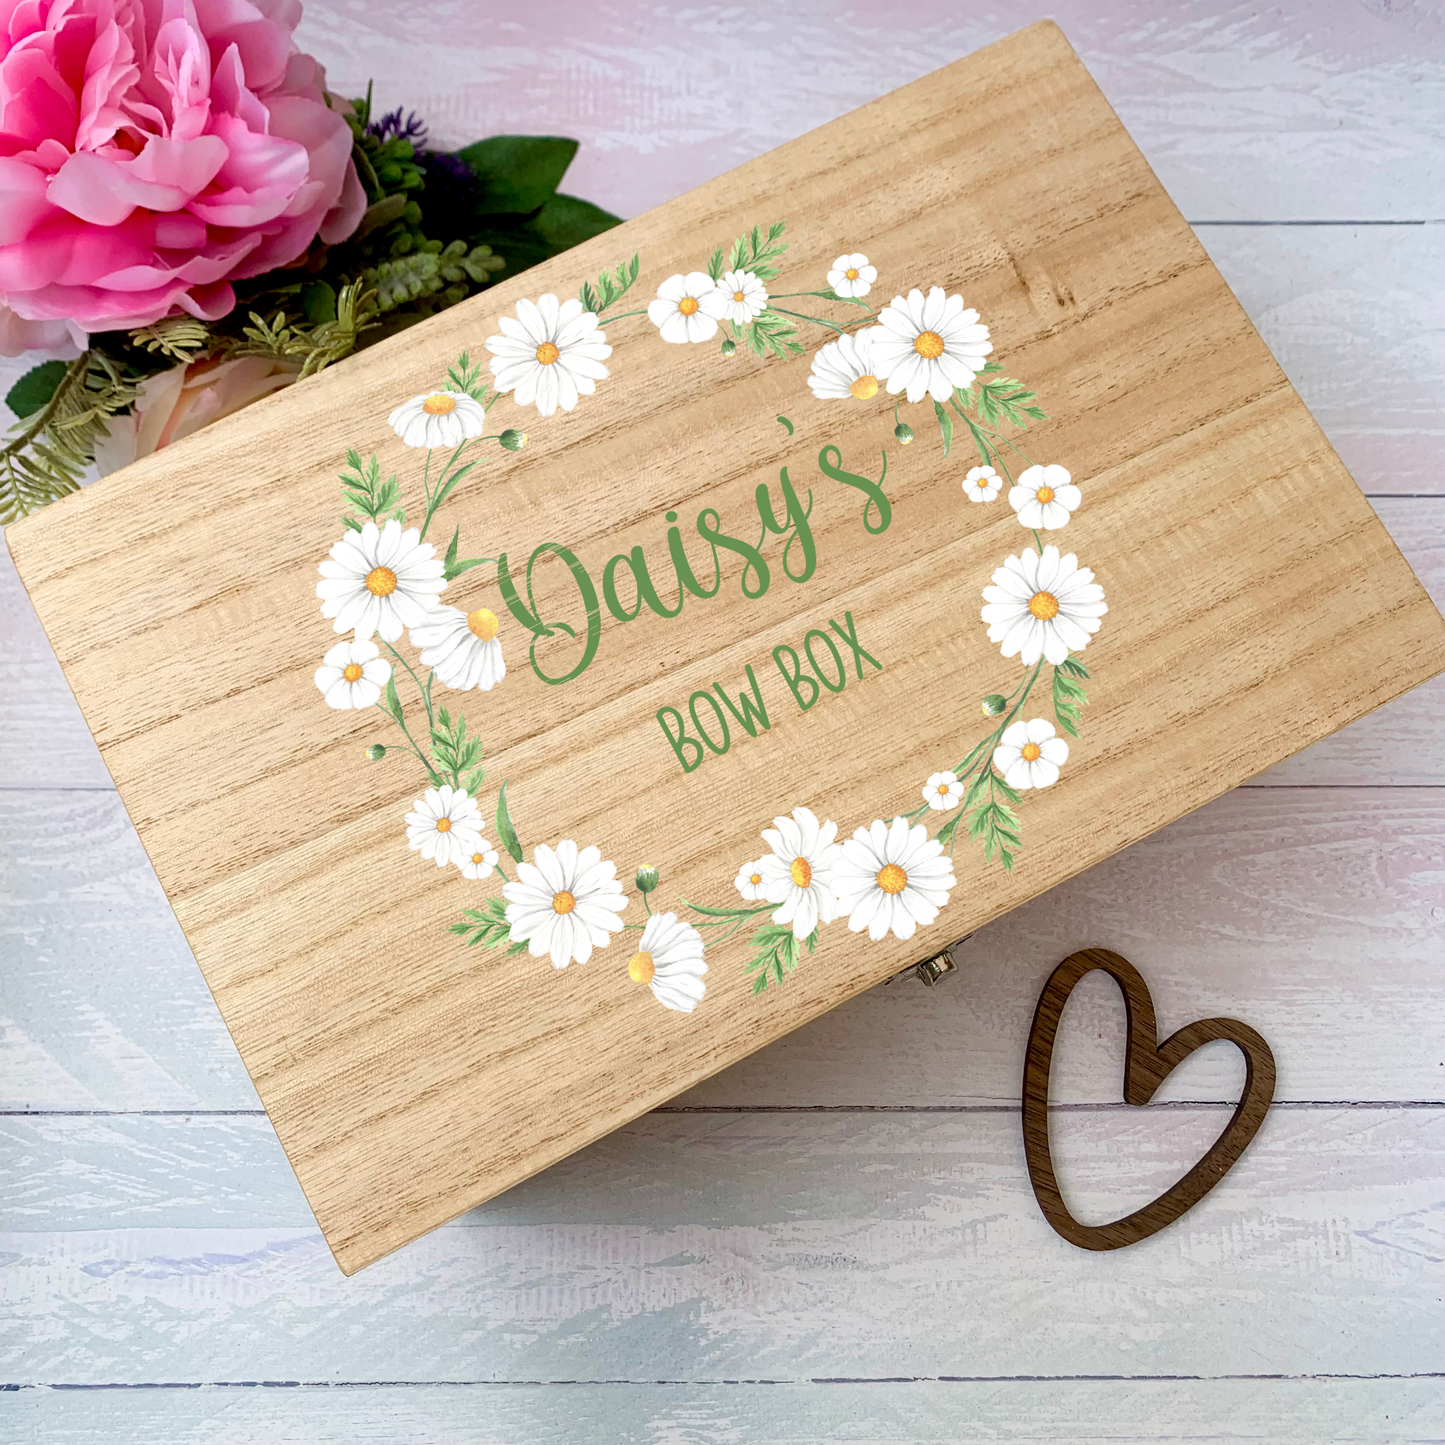 Daisy Bow Box, personalised wooden box